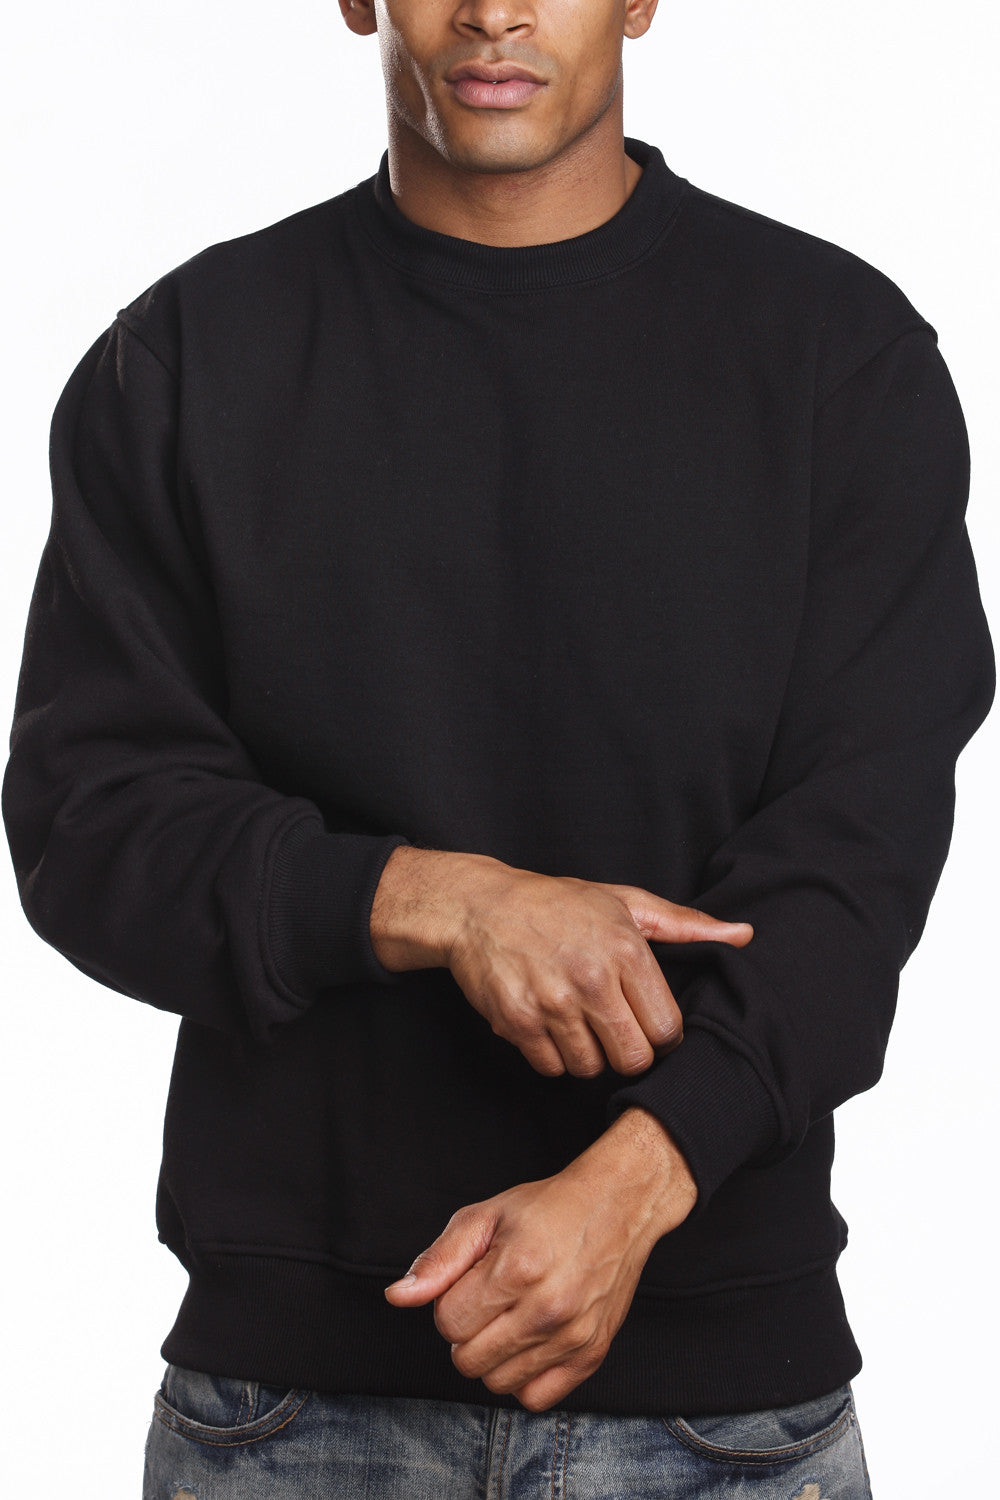 Grey Black Fur Heavy Sweater